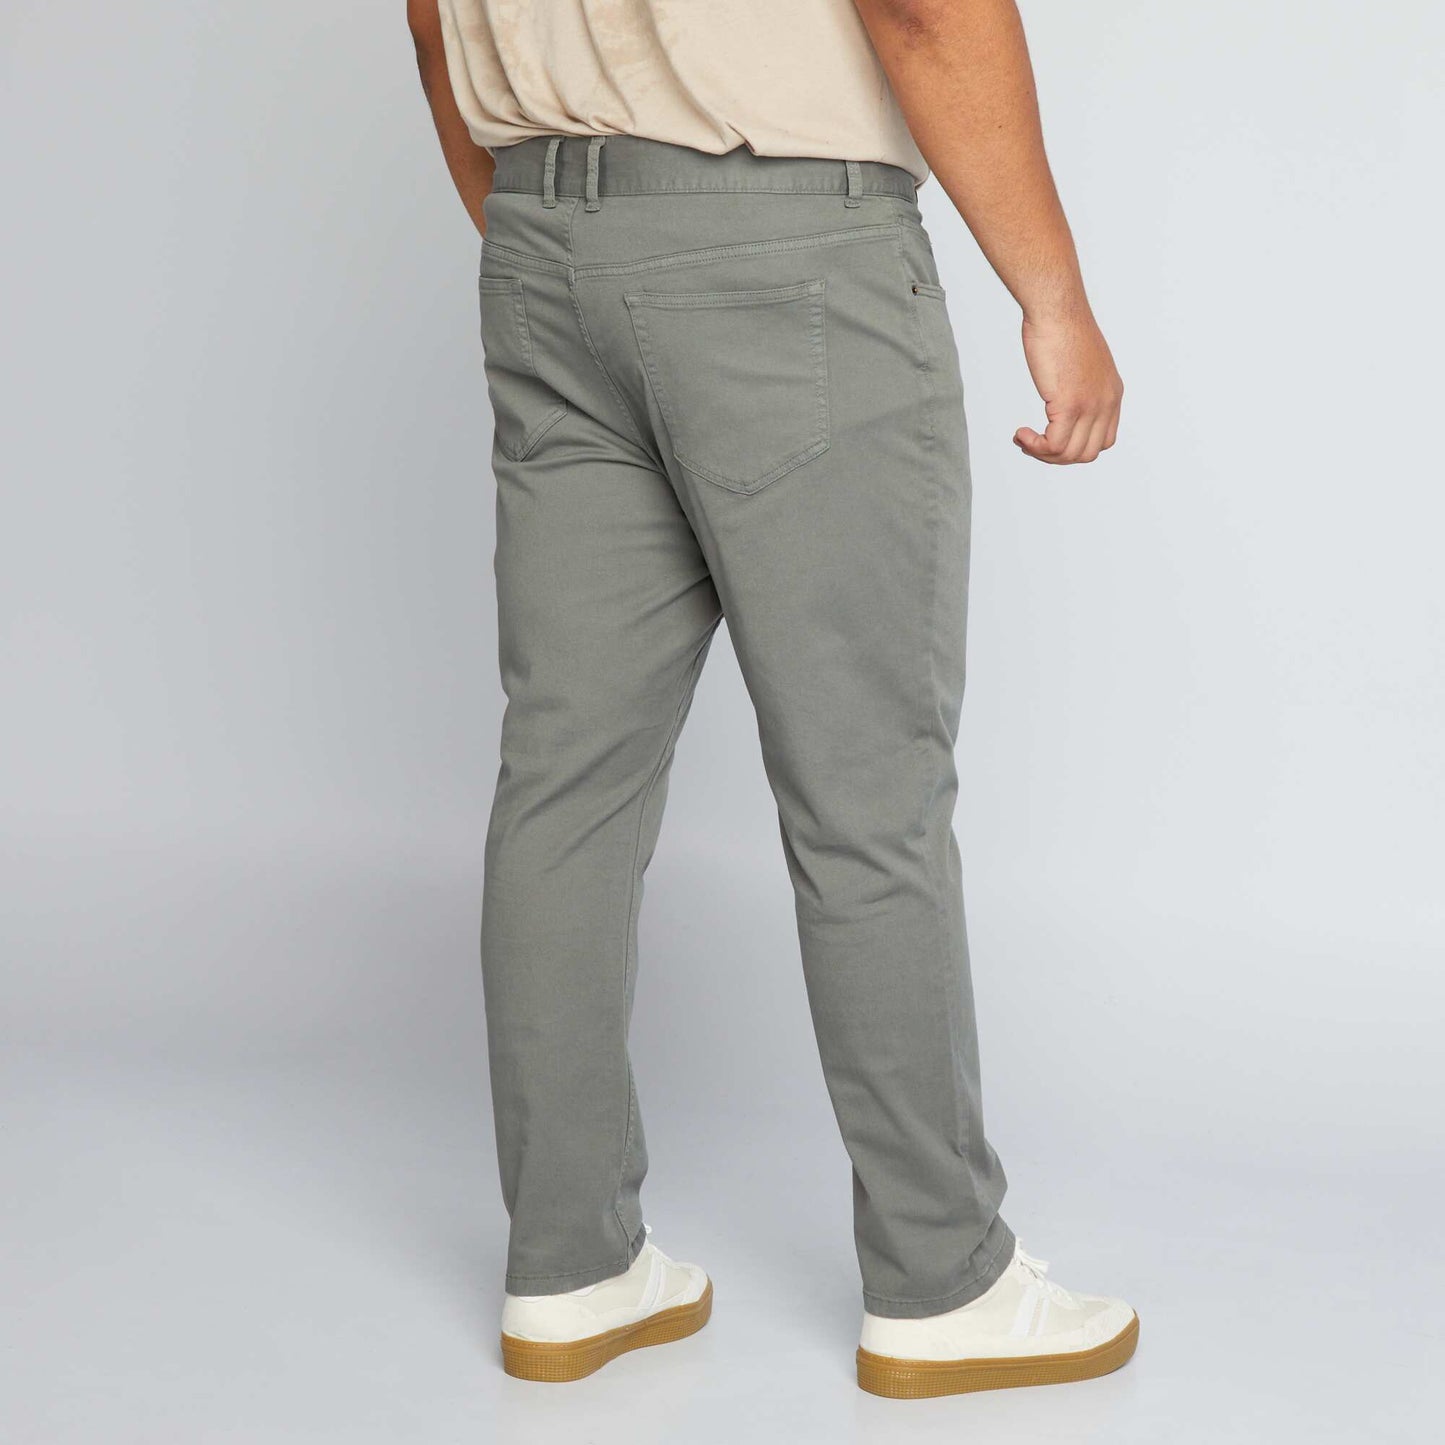 Pantalon slim L32 Kaki grisé